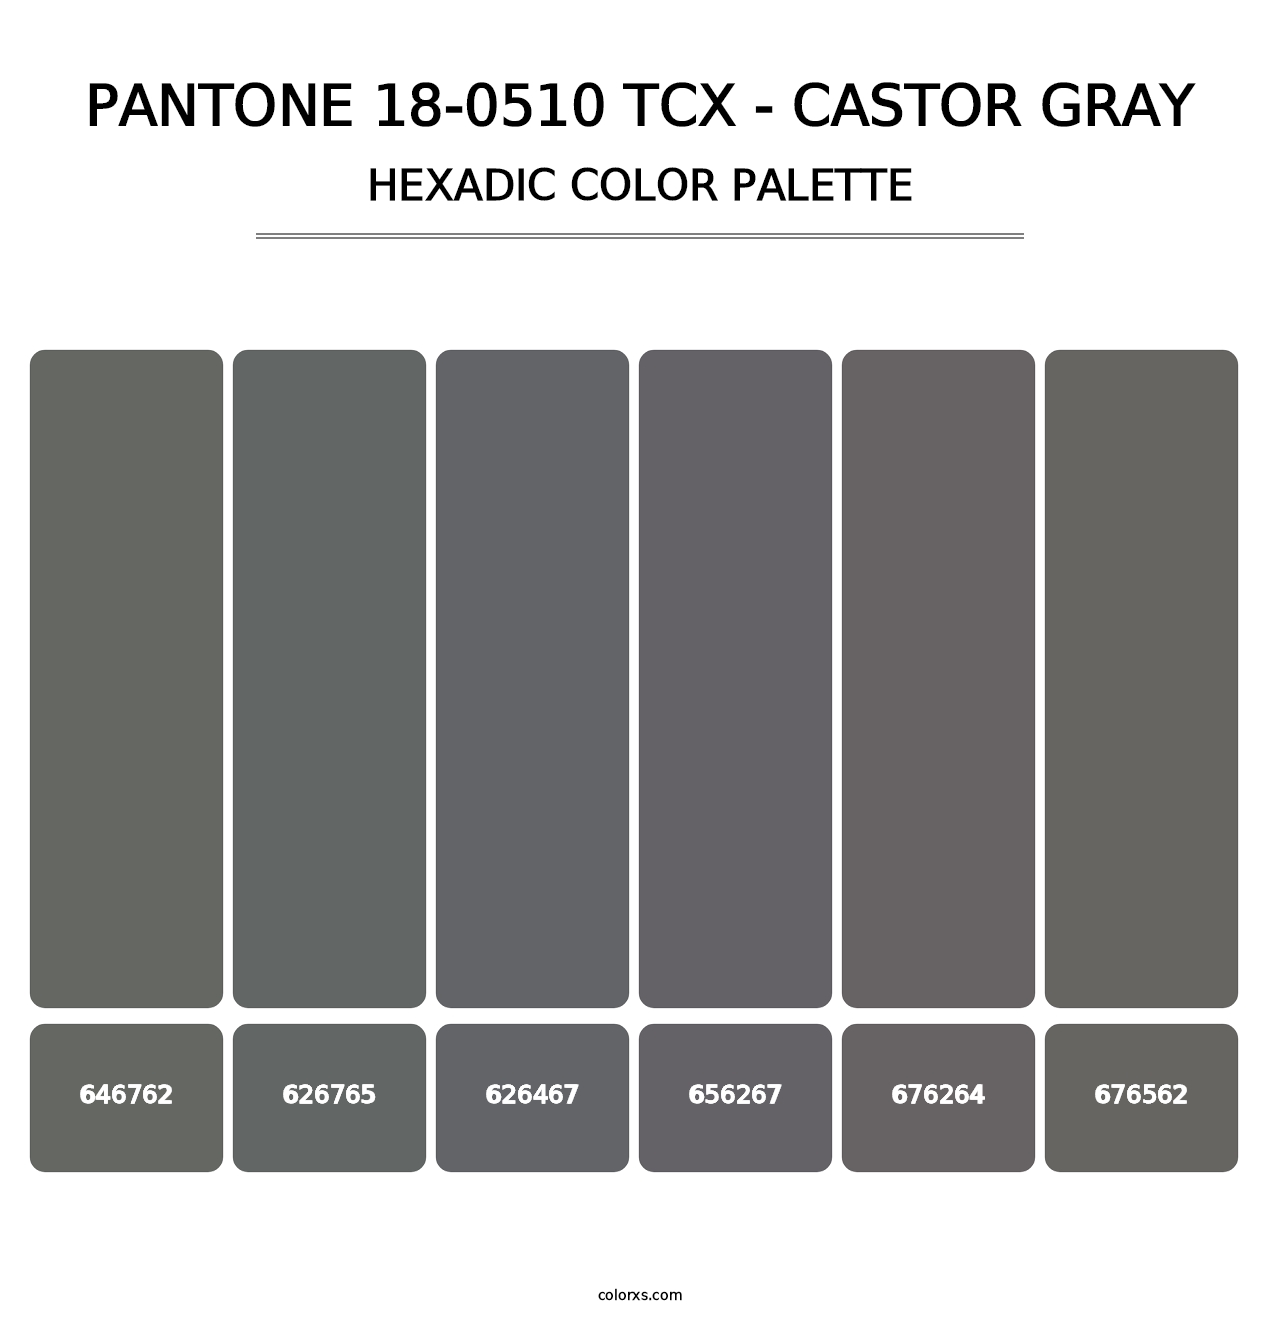 PANTONE 18-0510 TCX - Castor Gray - Hexadic Color Palette